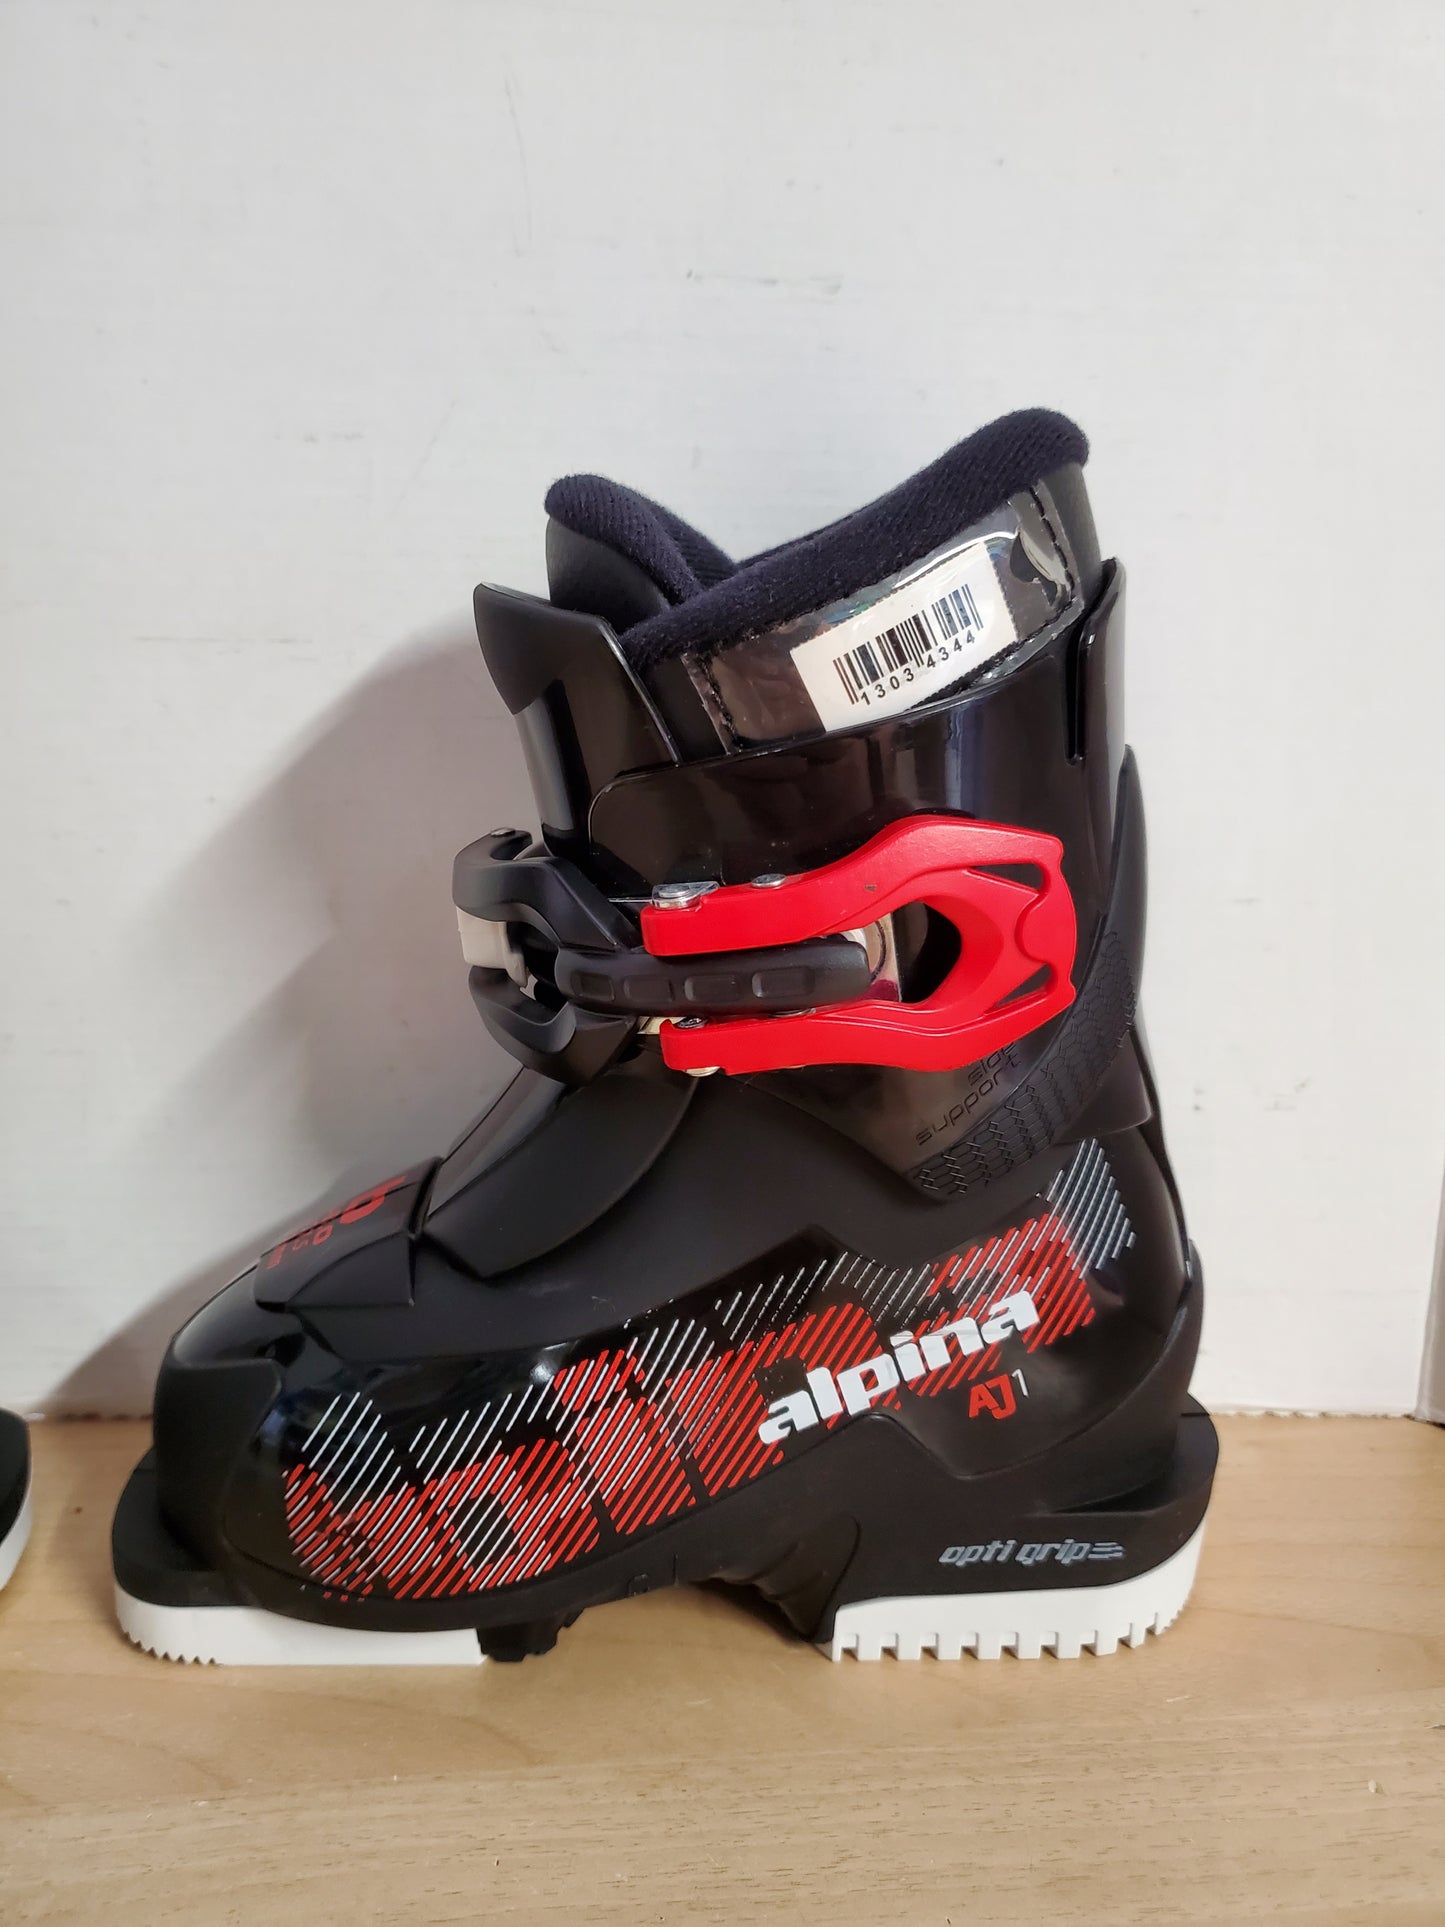 Ski Boots Mondo Size 16.0 Child Shoe Size 9-10 Mondo 202 mm Alpina Black Red White New Demo Model